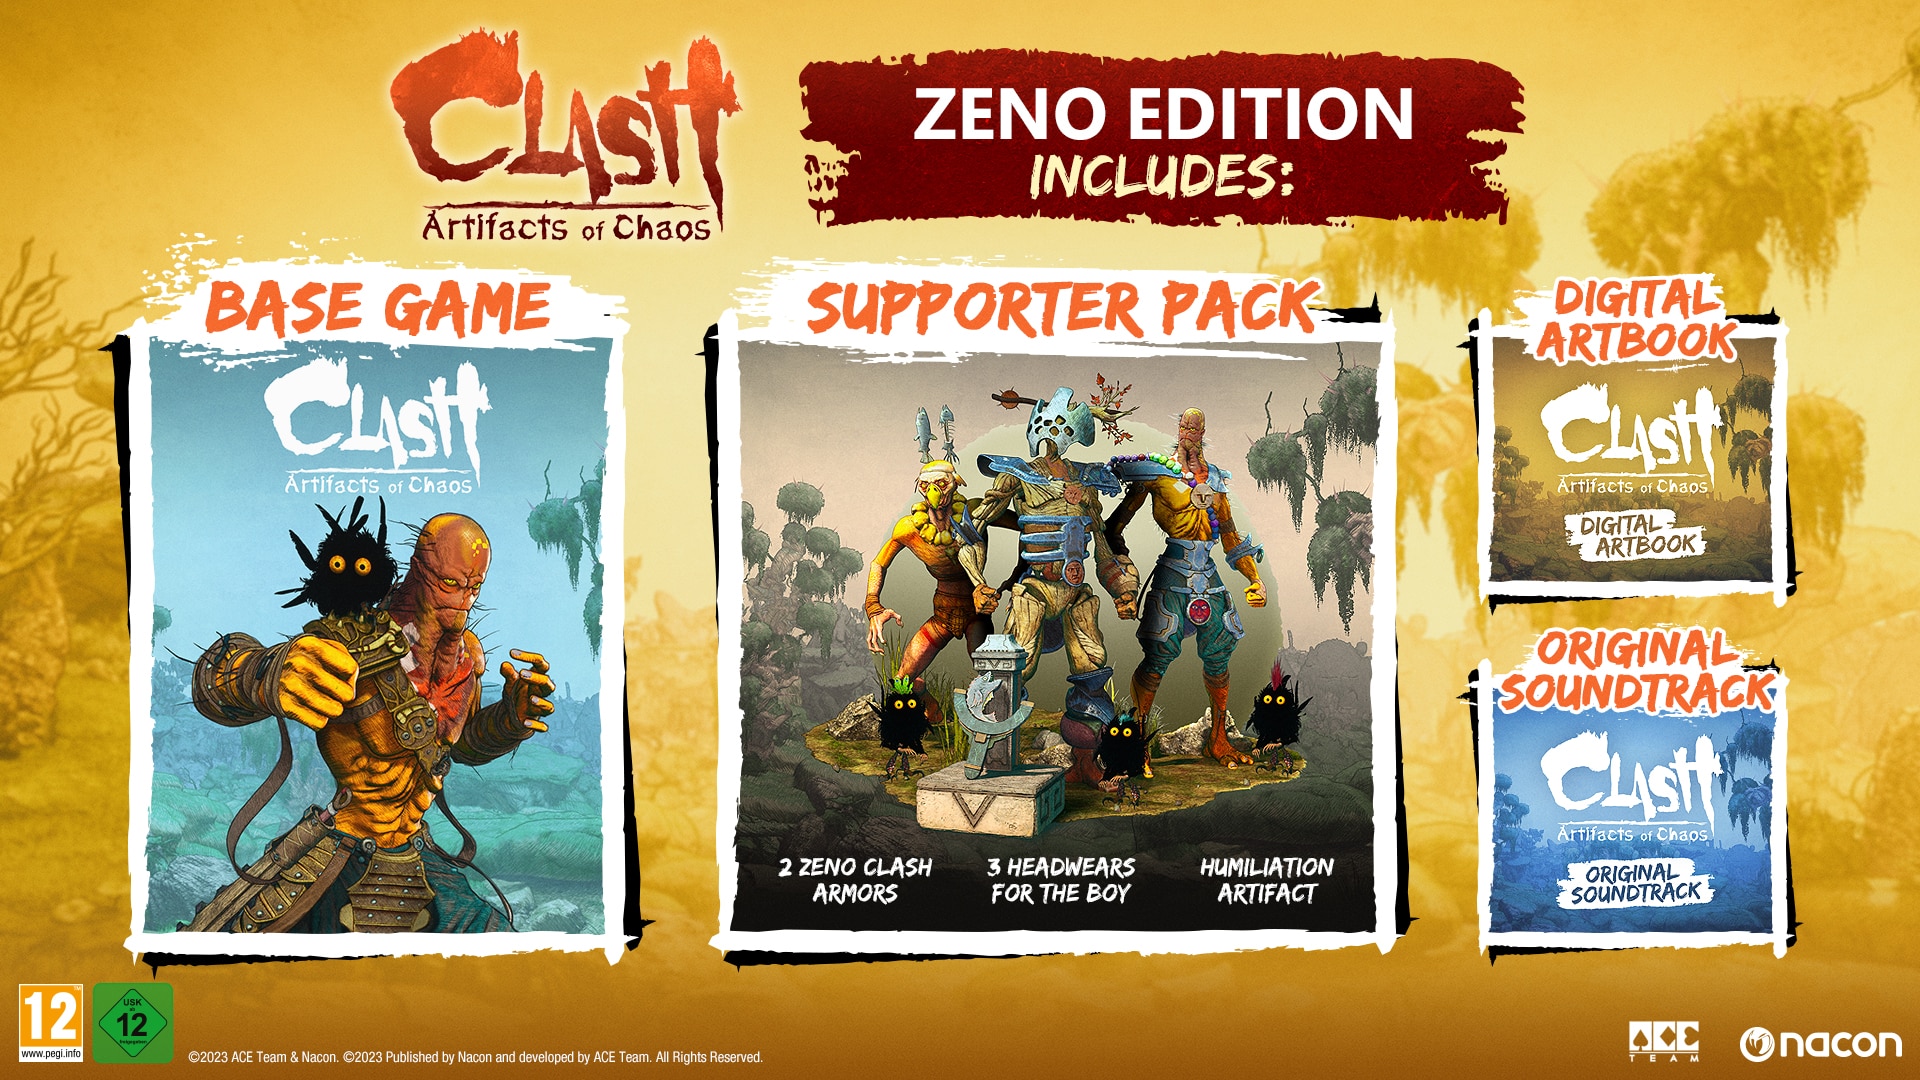 Clash: Artifacts of Chaos Zeno Edition